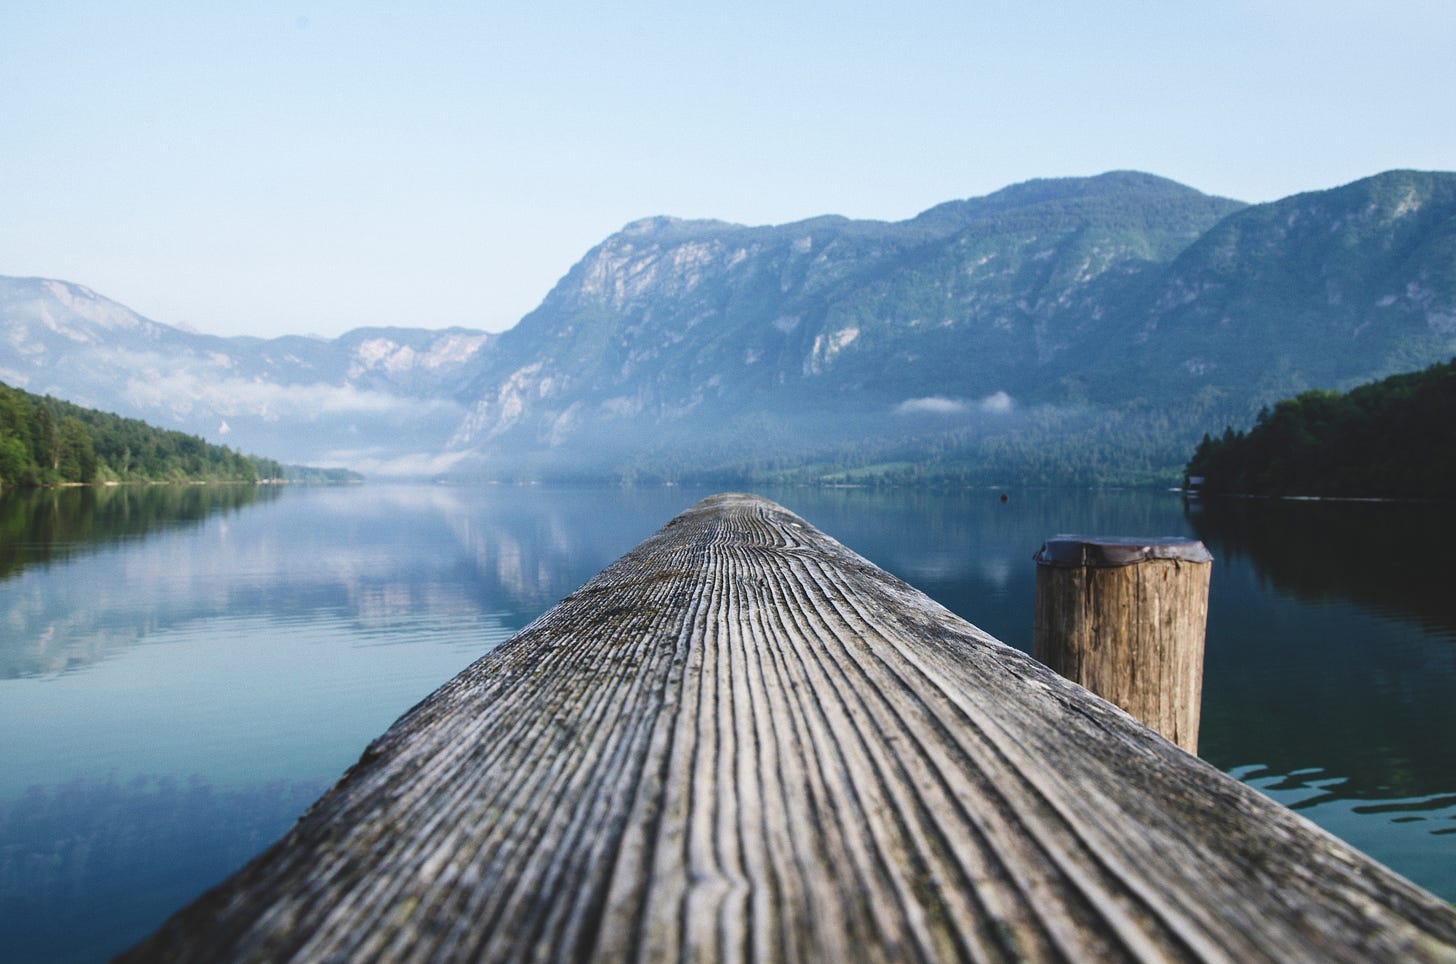 An old wodden plank reaching into a beautiful mountain lake